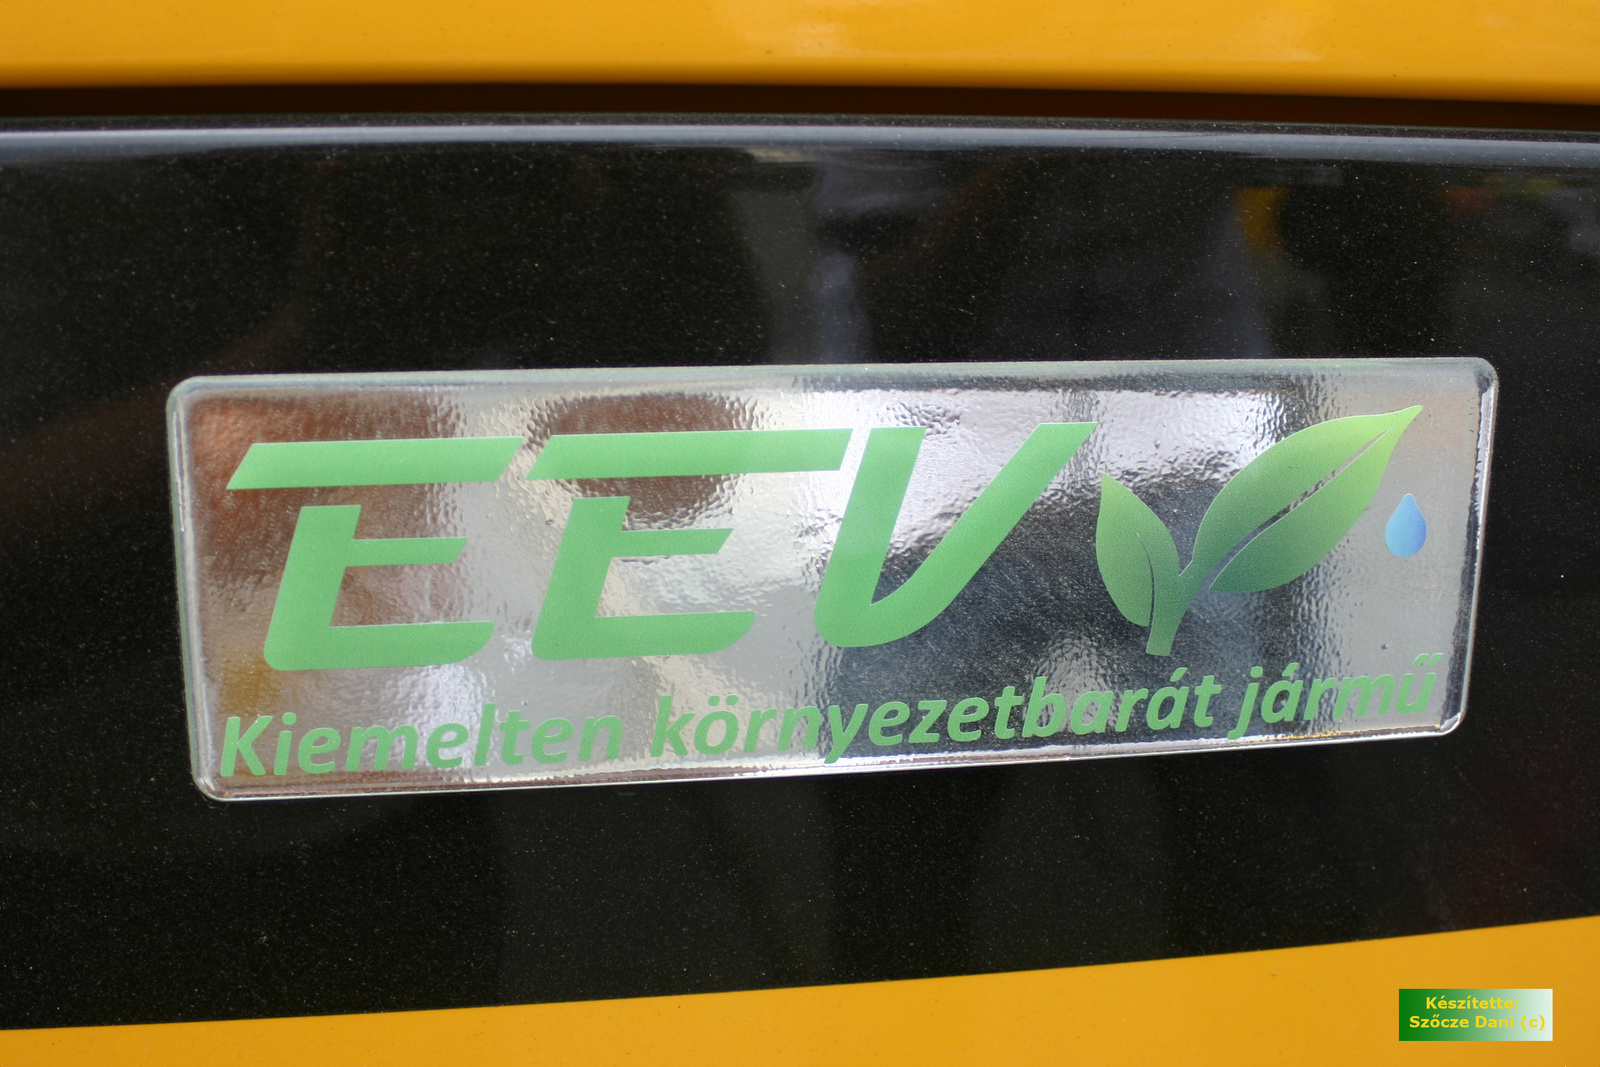 EEV - Enhanced environmentally friendly vehicle